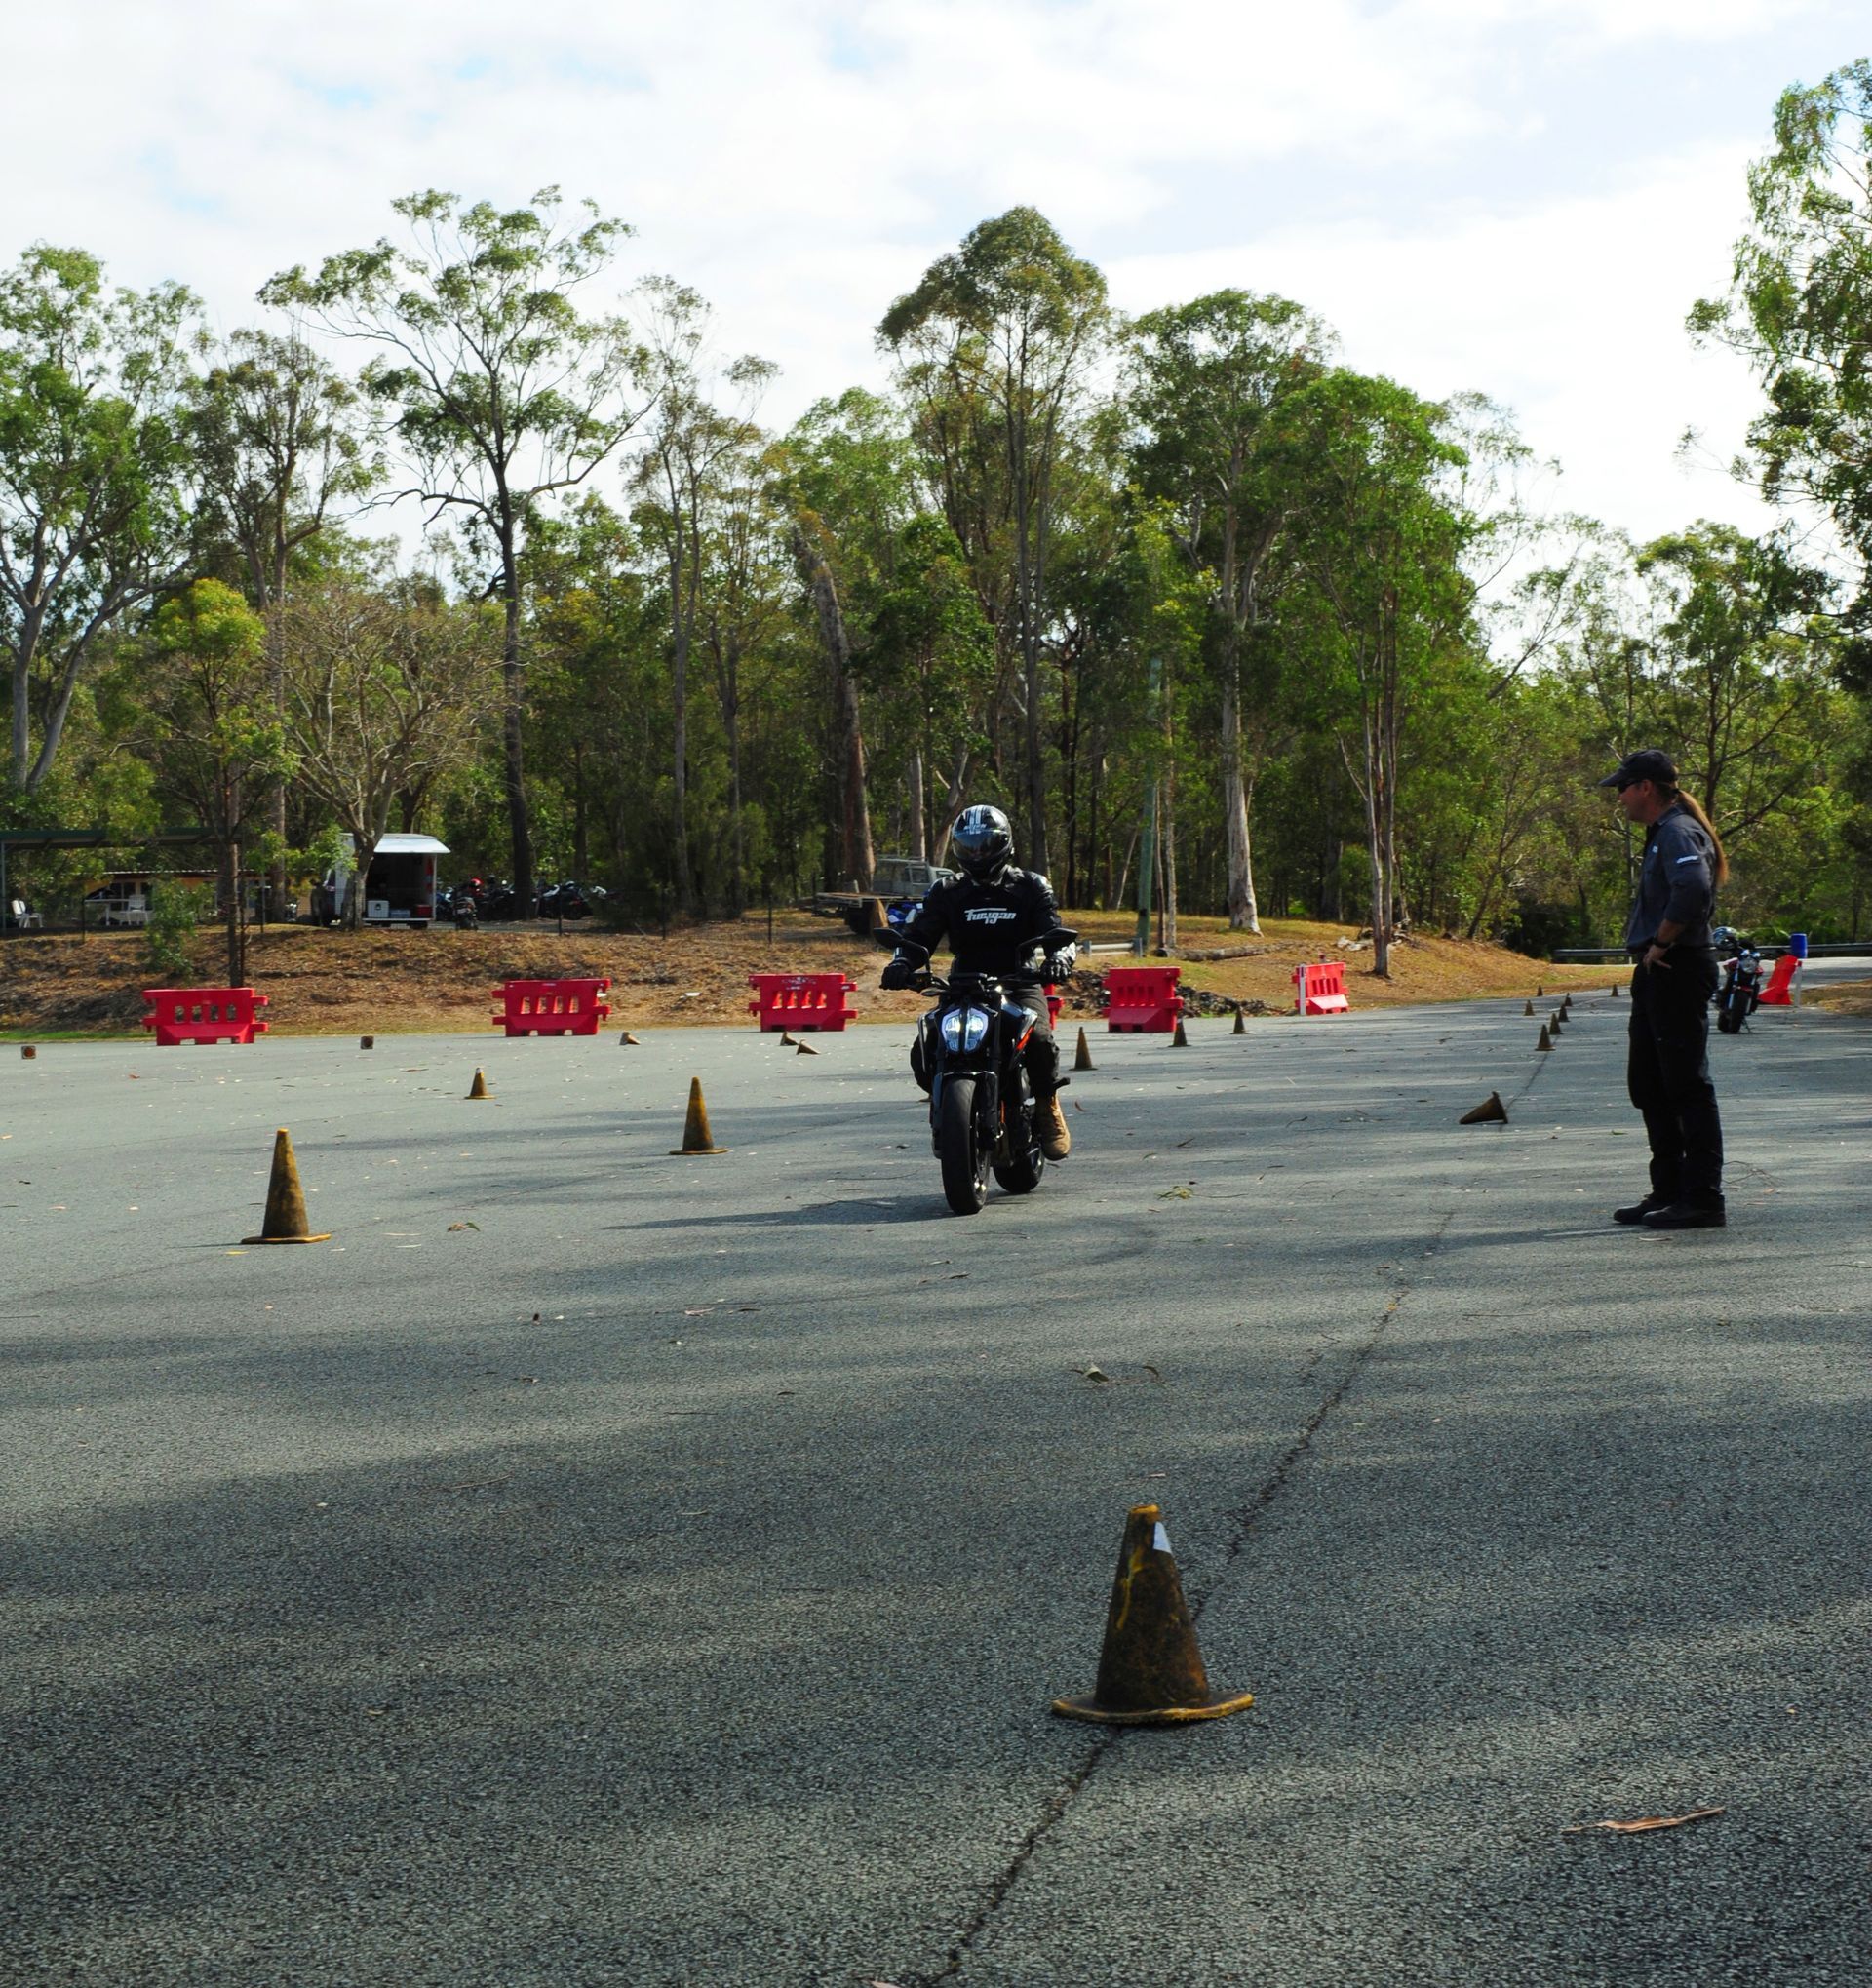 Motorcycle training at motorcycle masters gold coast